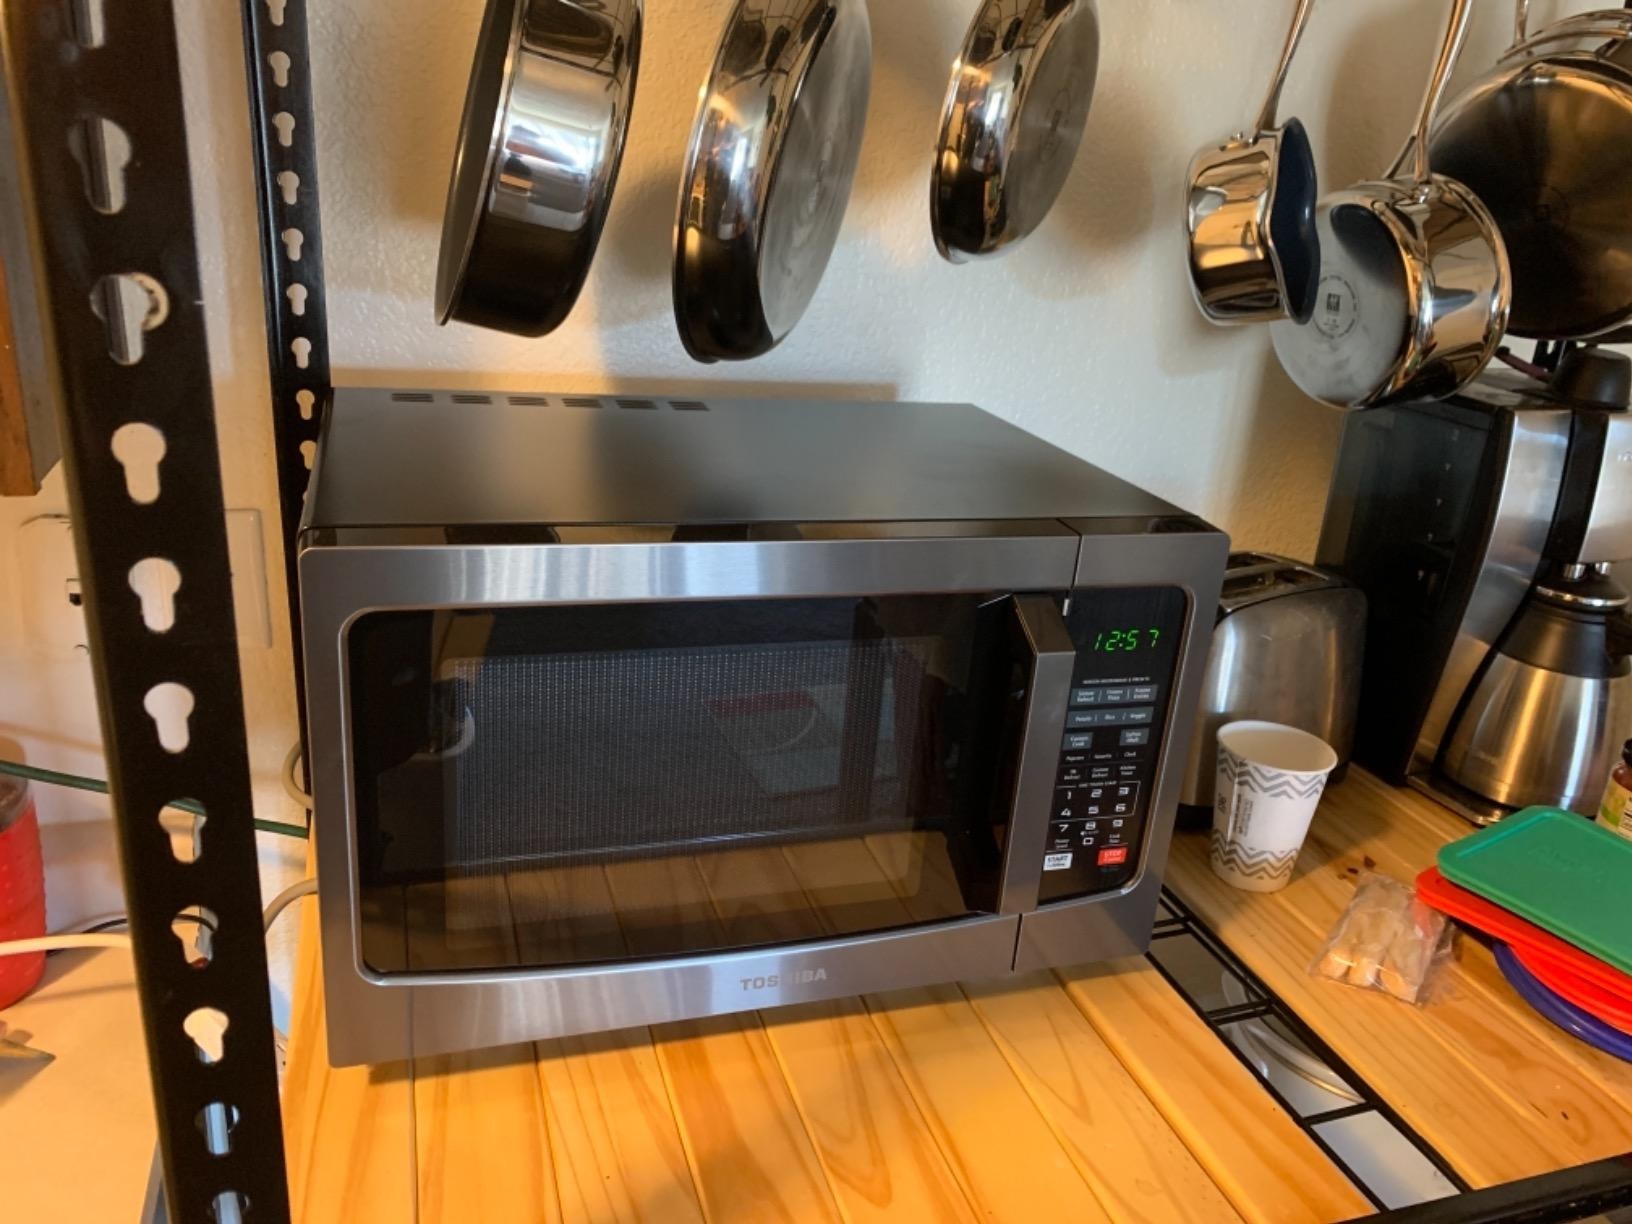 Microwave oven - Toshiba EM131A5C-SS 